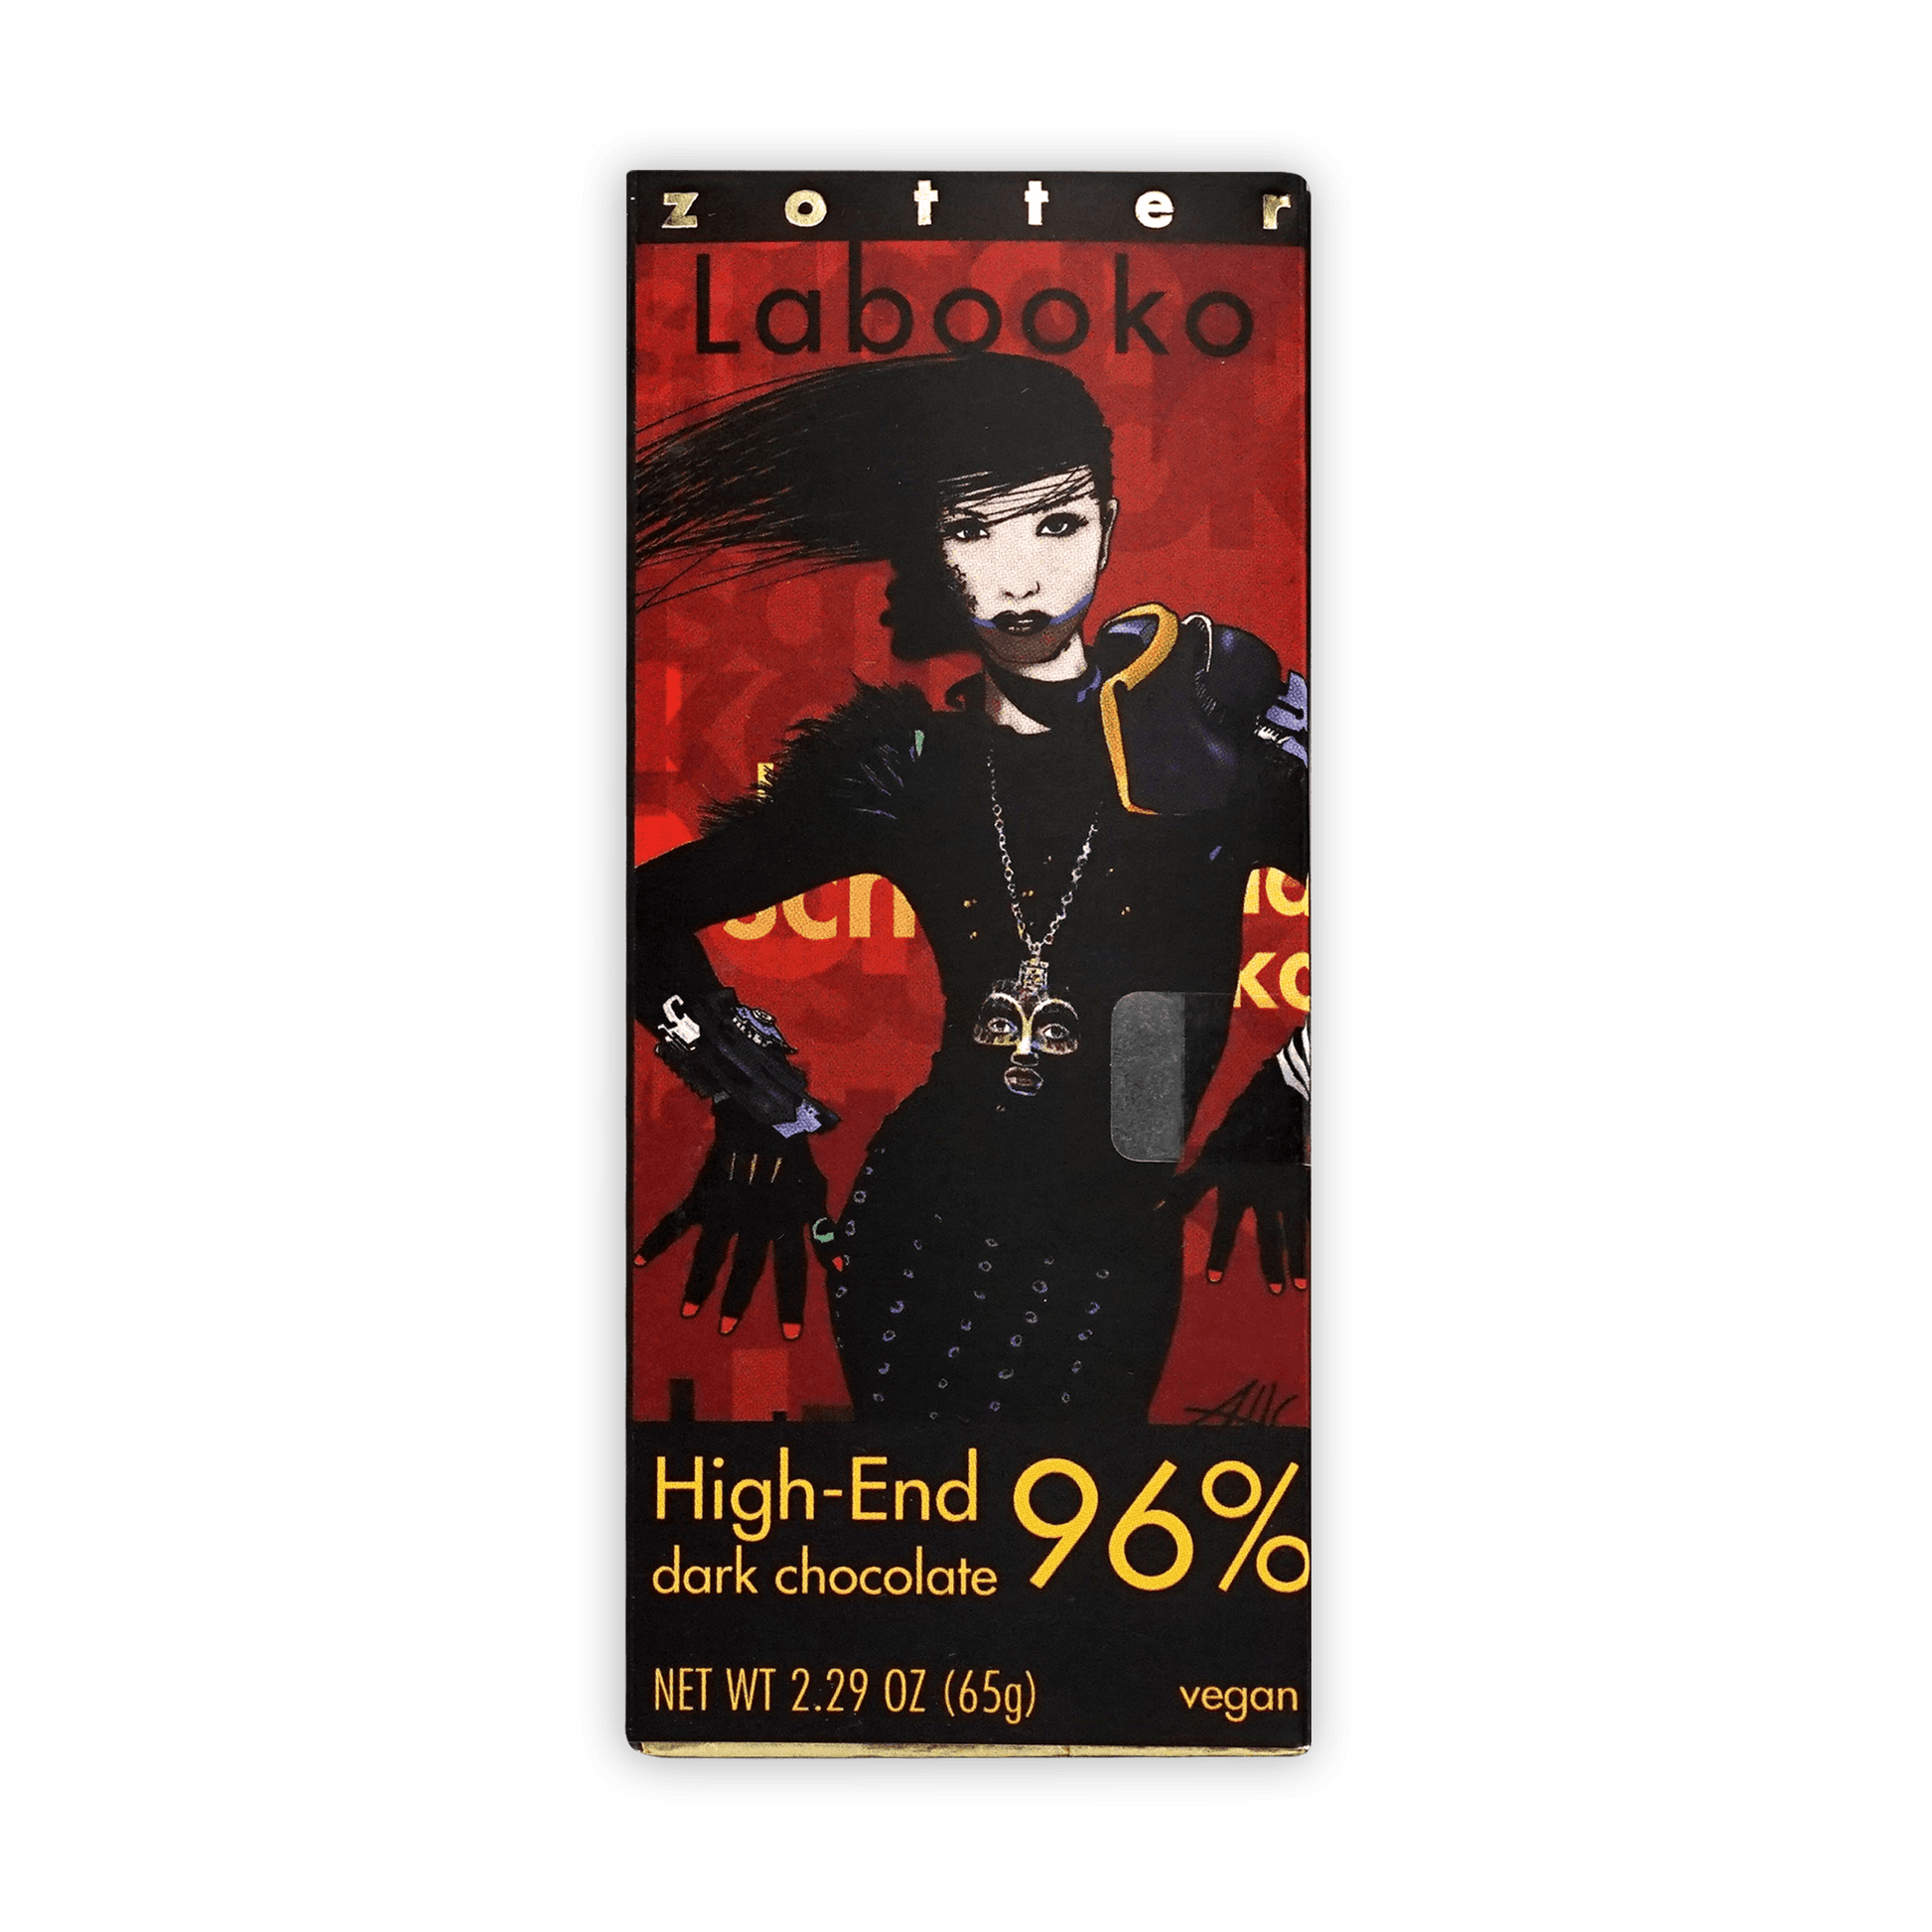 Labooko High End Chocolate 96%